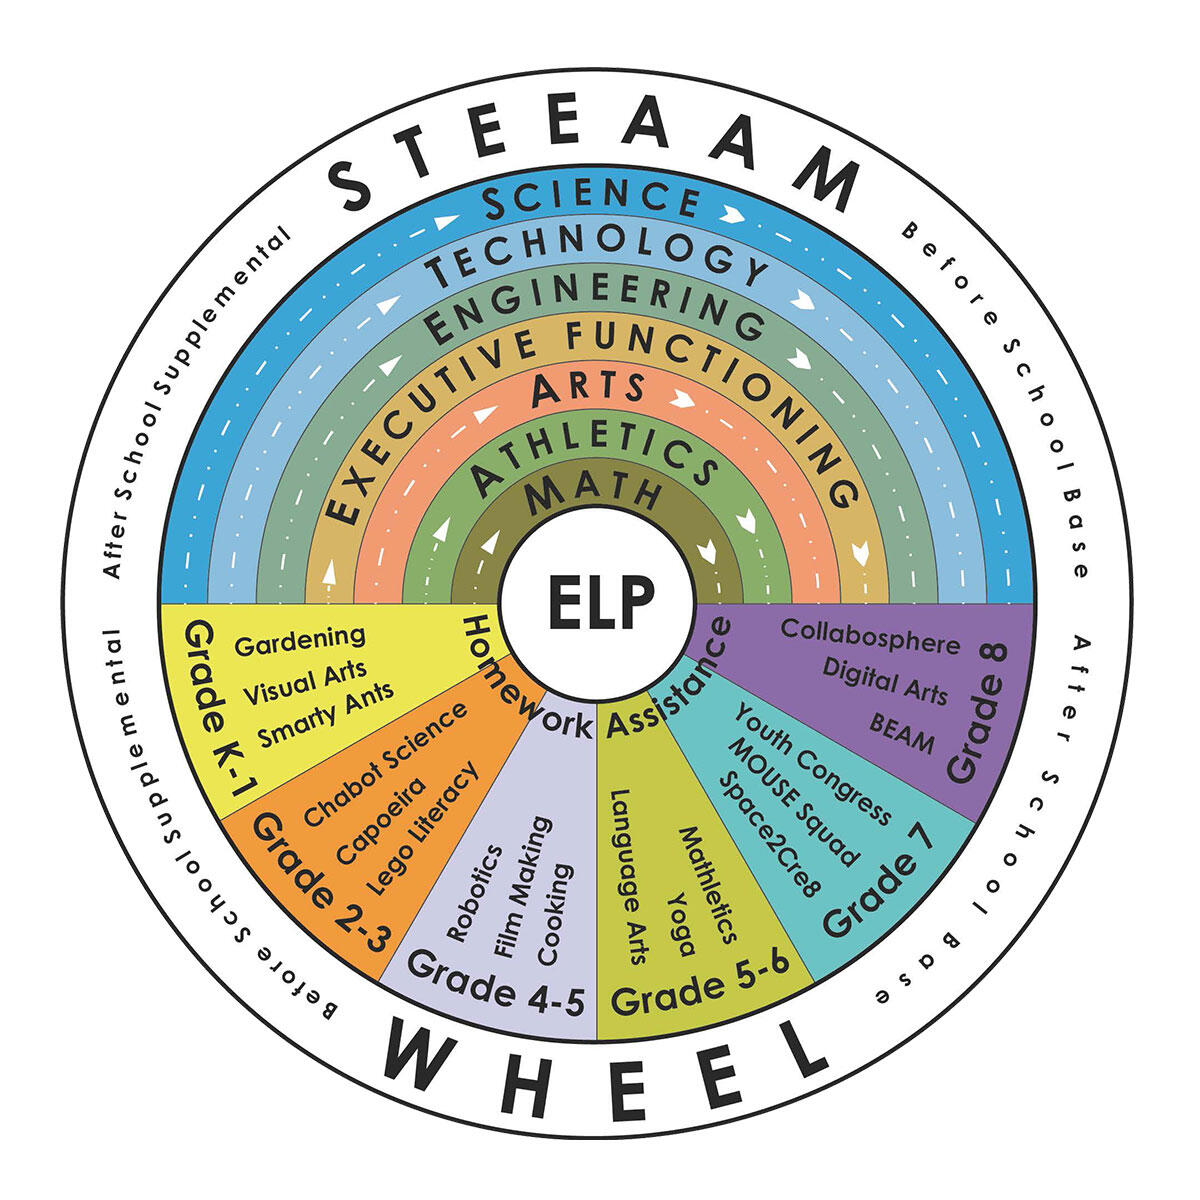 Science, Technology, Engineering, Executive Functioning, Arts, Athletics, Math (STEEAM) Wheel